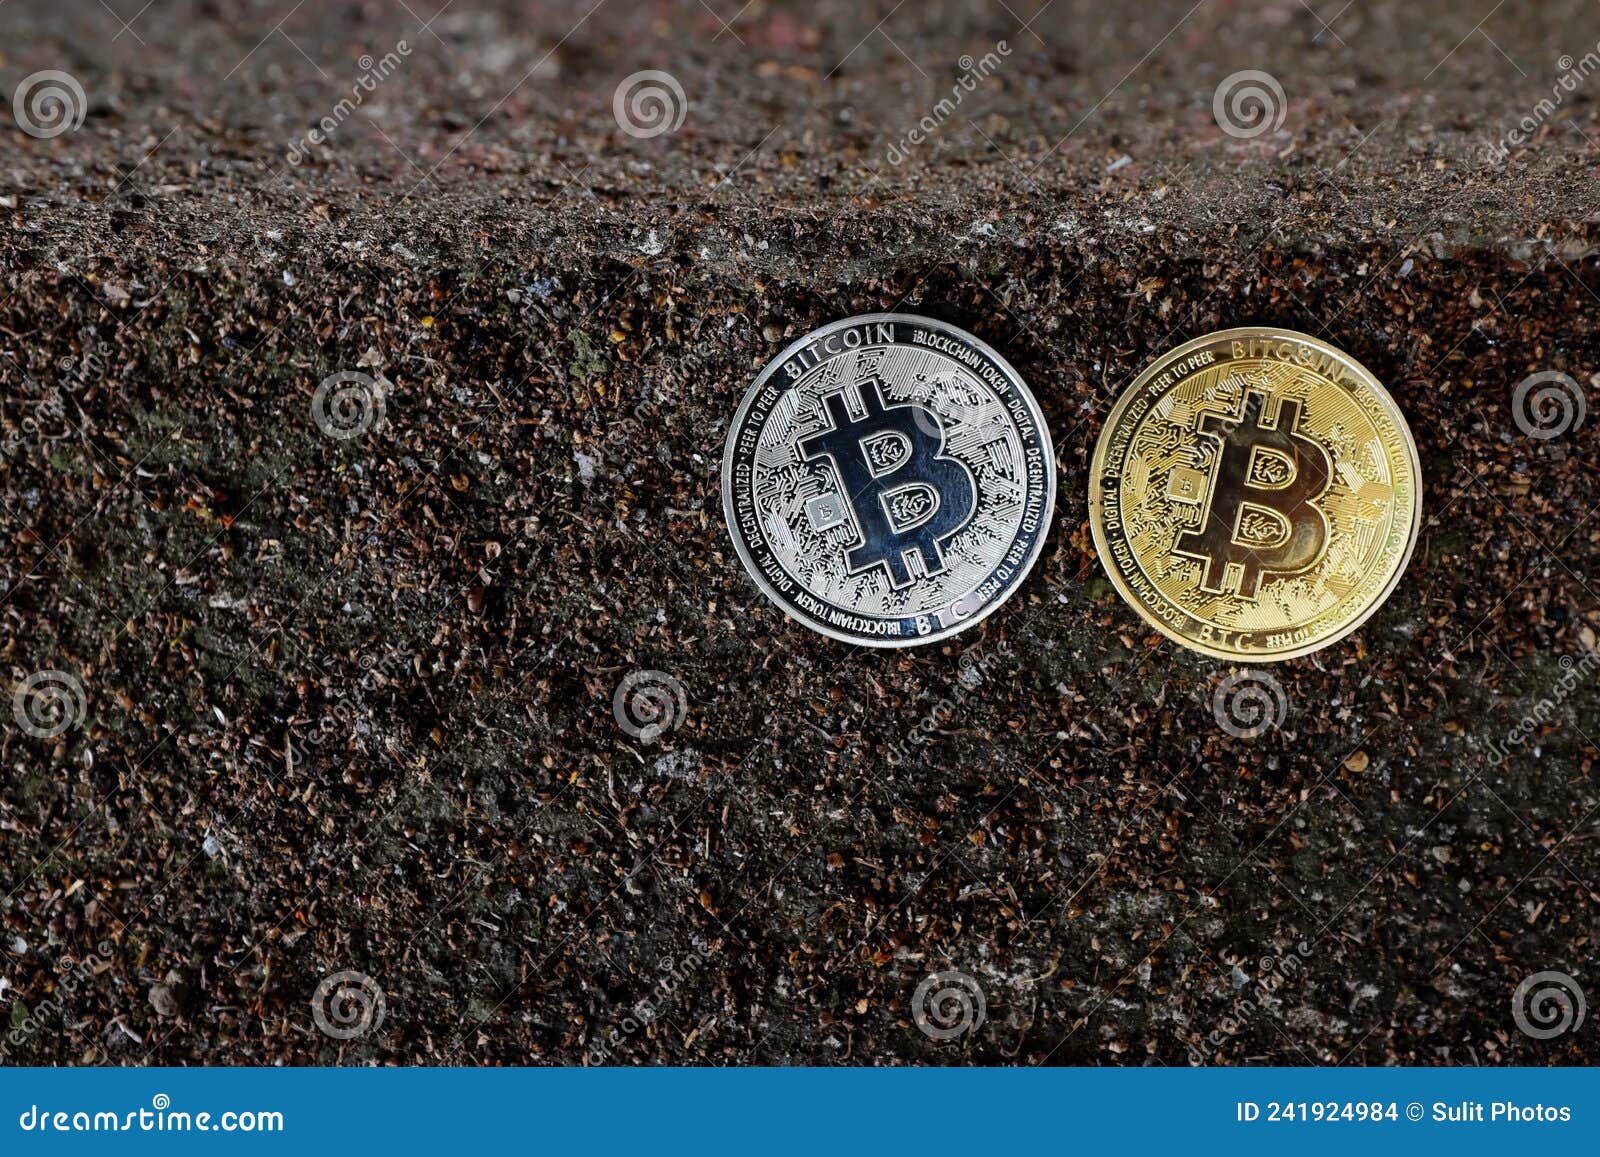 underground crypto coins